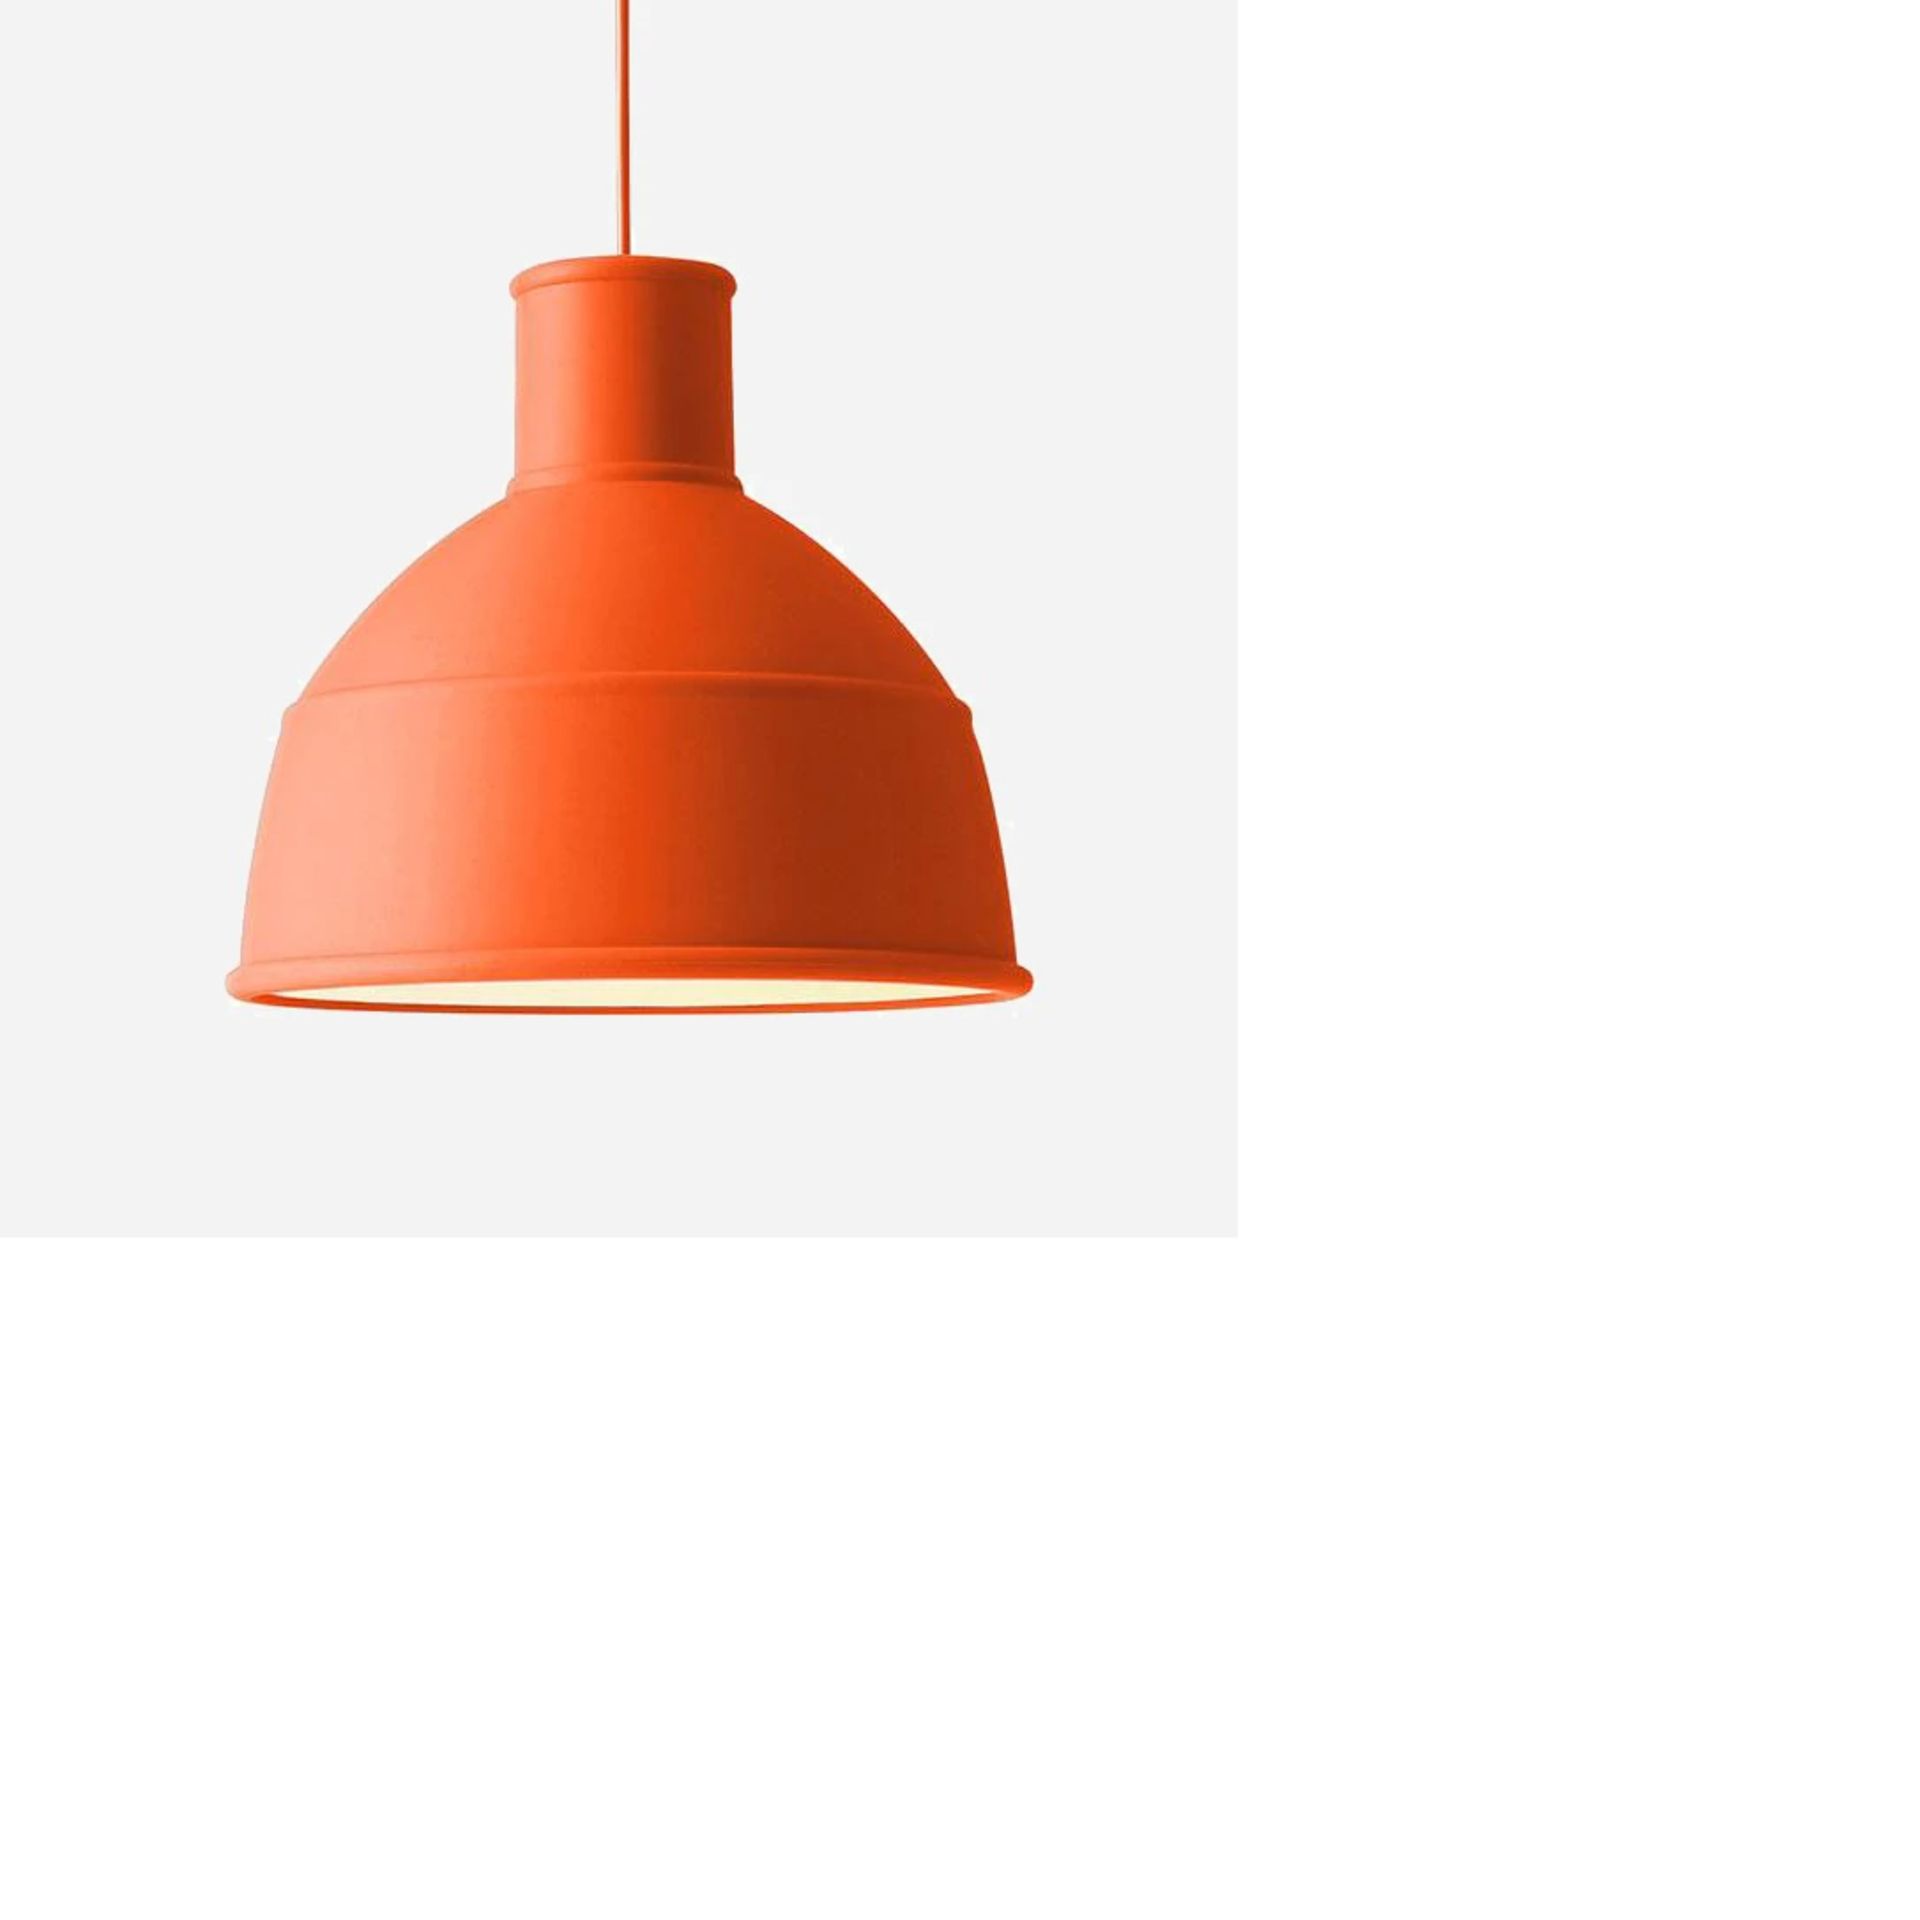 Unefol orange pendant enamel high bay industrial design classic pendant this industrial stylish - Image 2 of 2